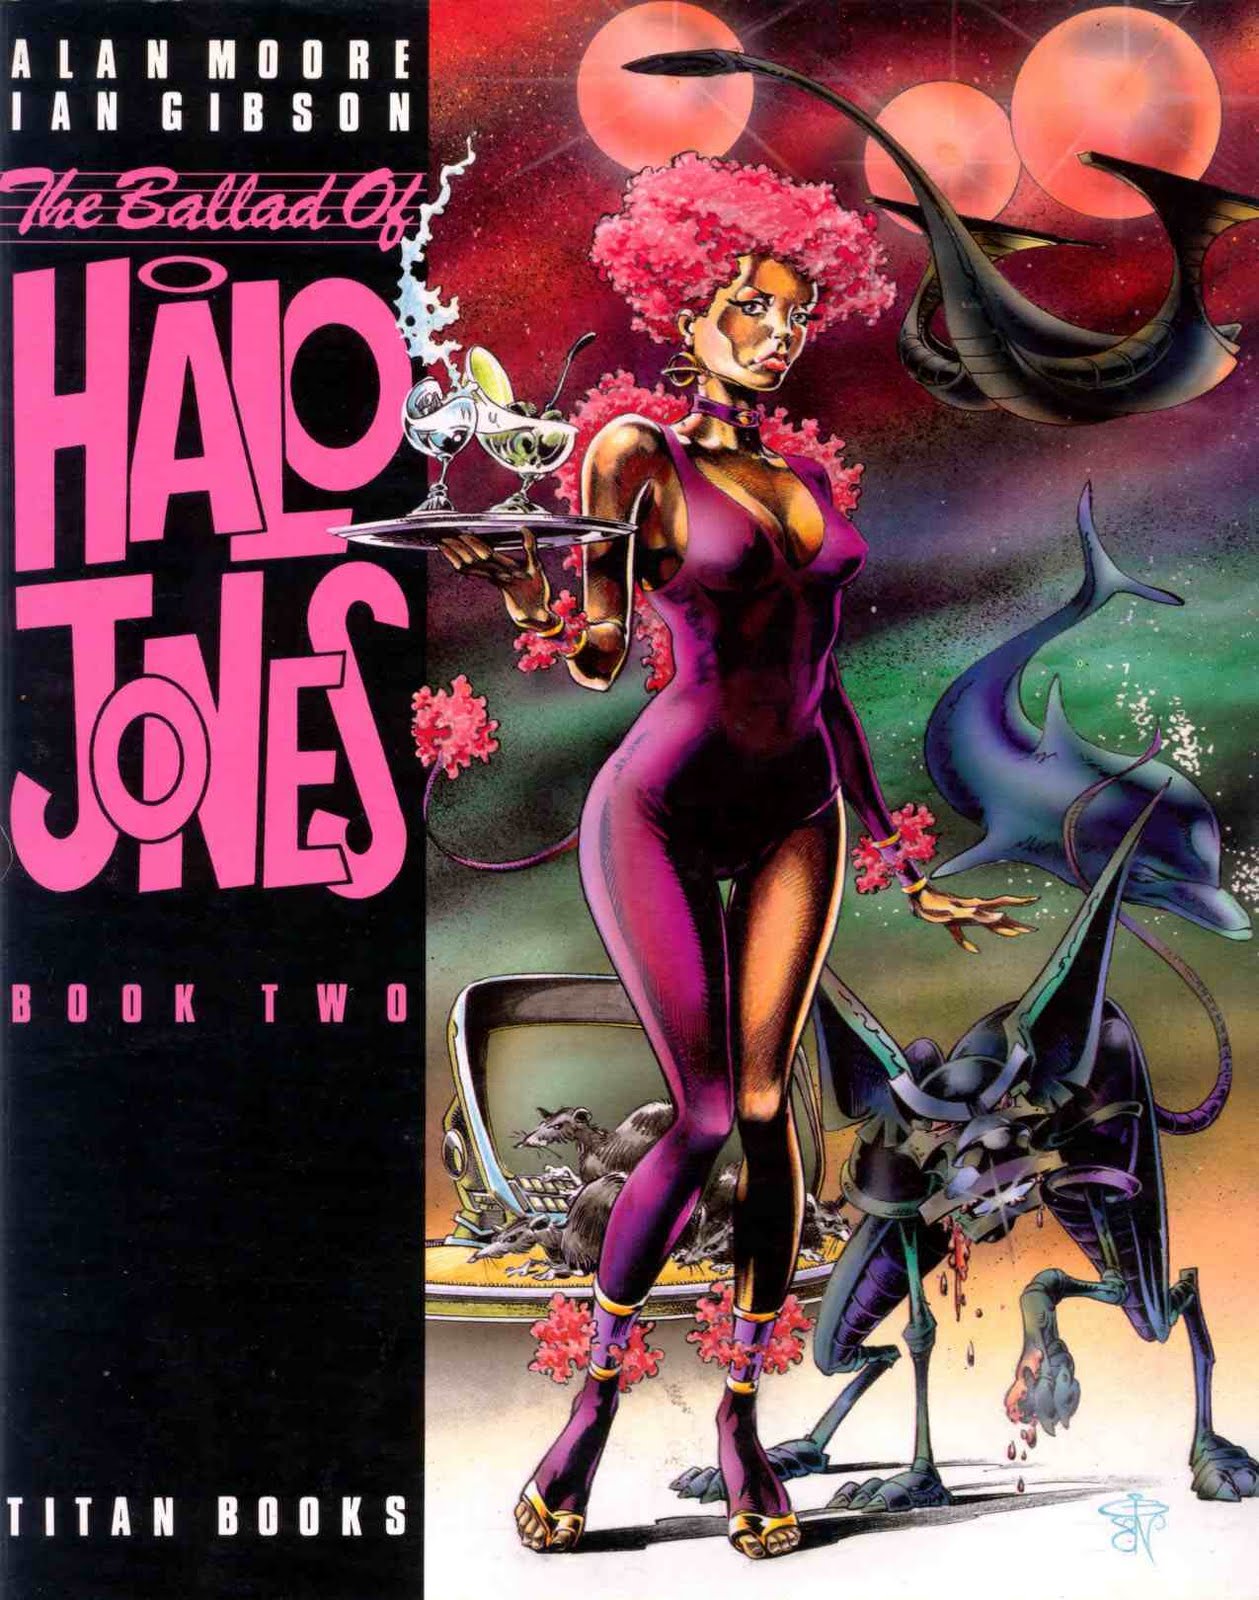 High Resolution Wallpaper | The Ballad Of Halo Jones 1259x1600 px